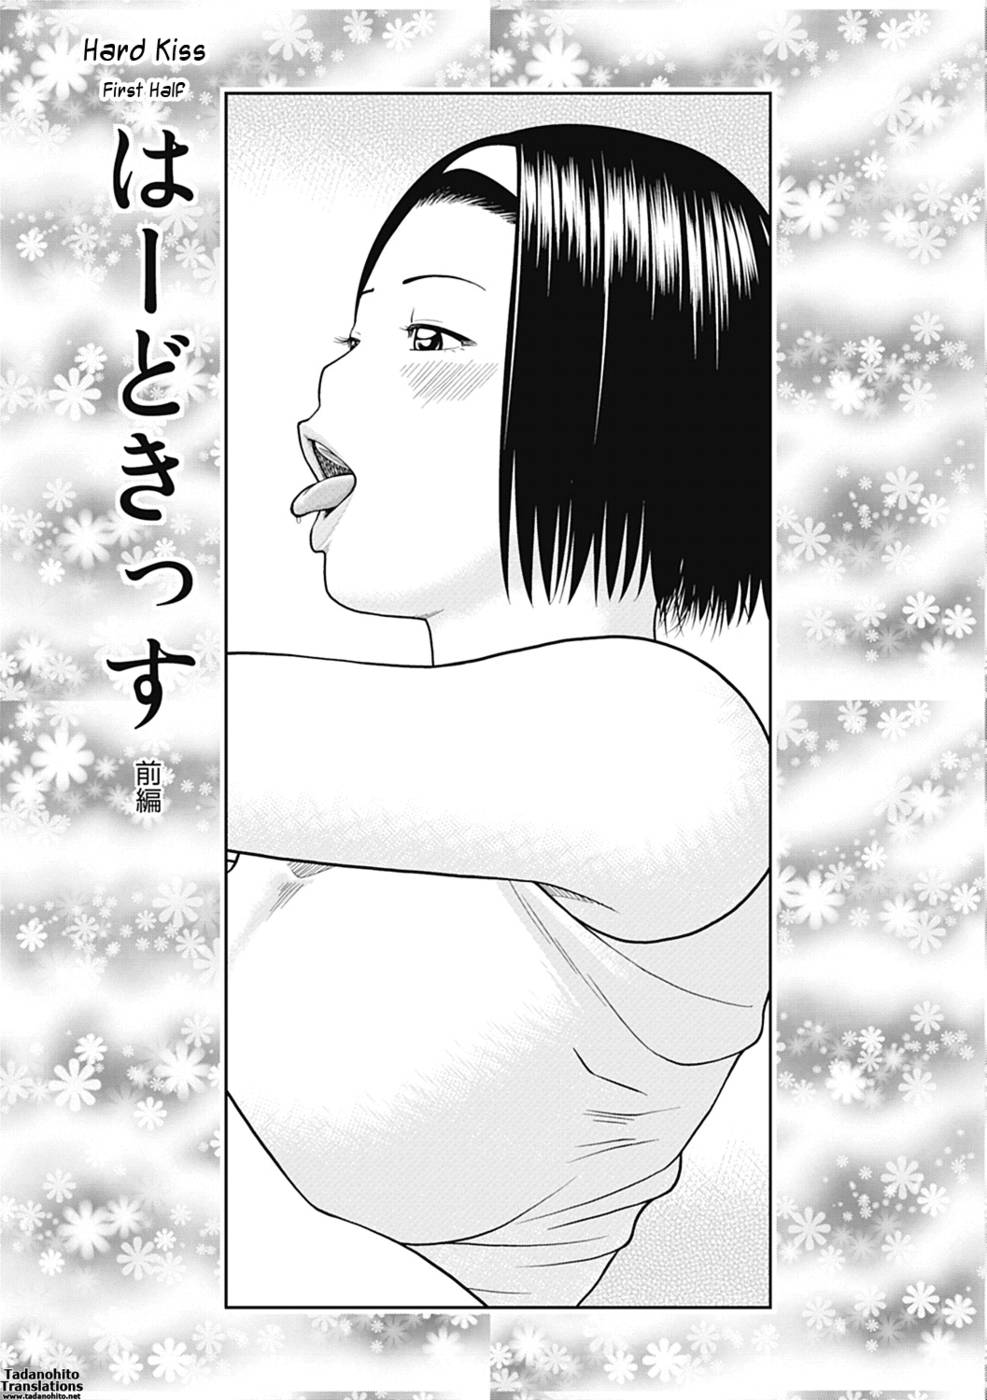 Hentai Manga Comic-34 Year Old Unsatisfied Wife-Chapter 1-Hard Kiss-First Half-3